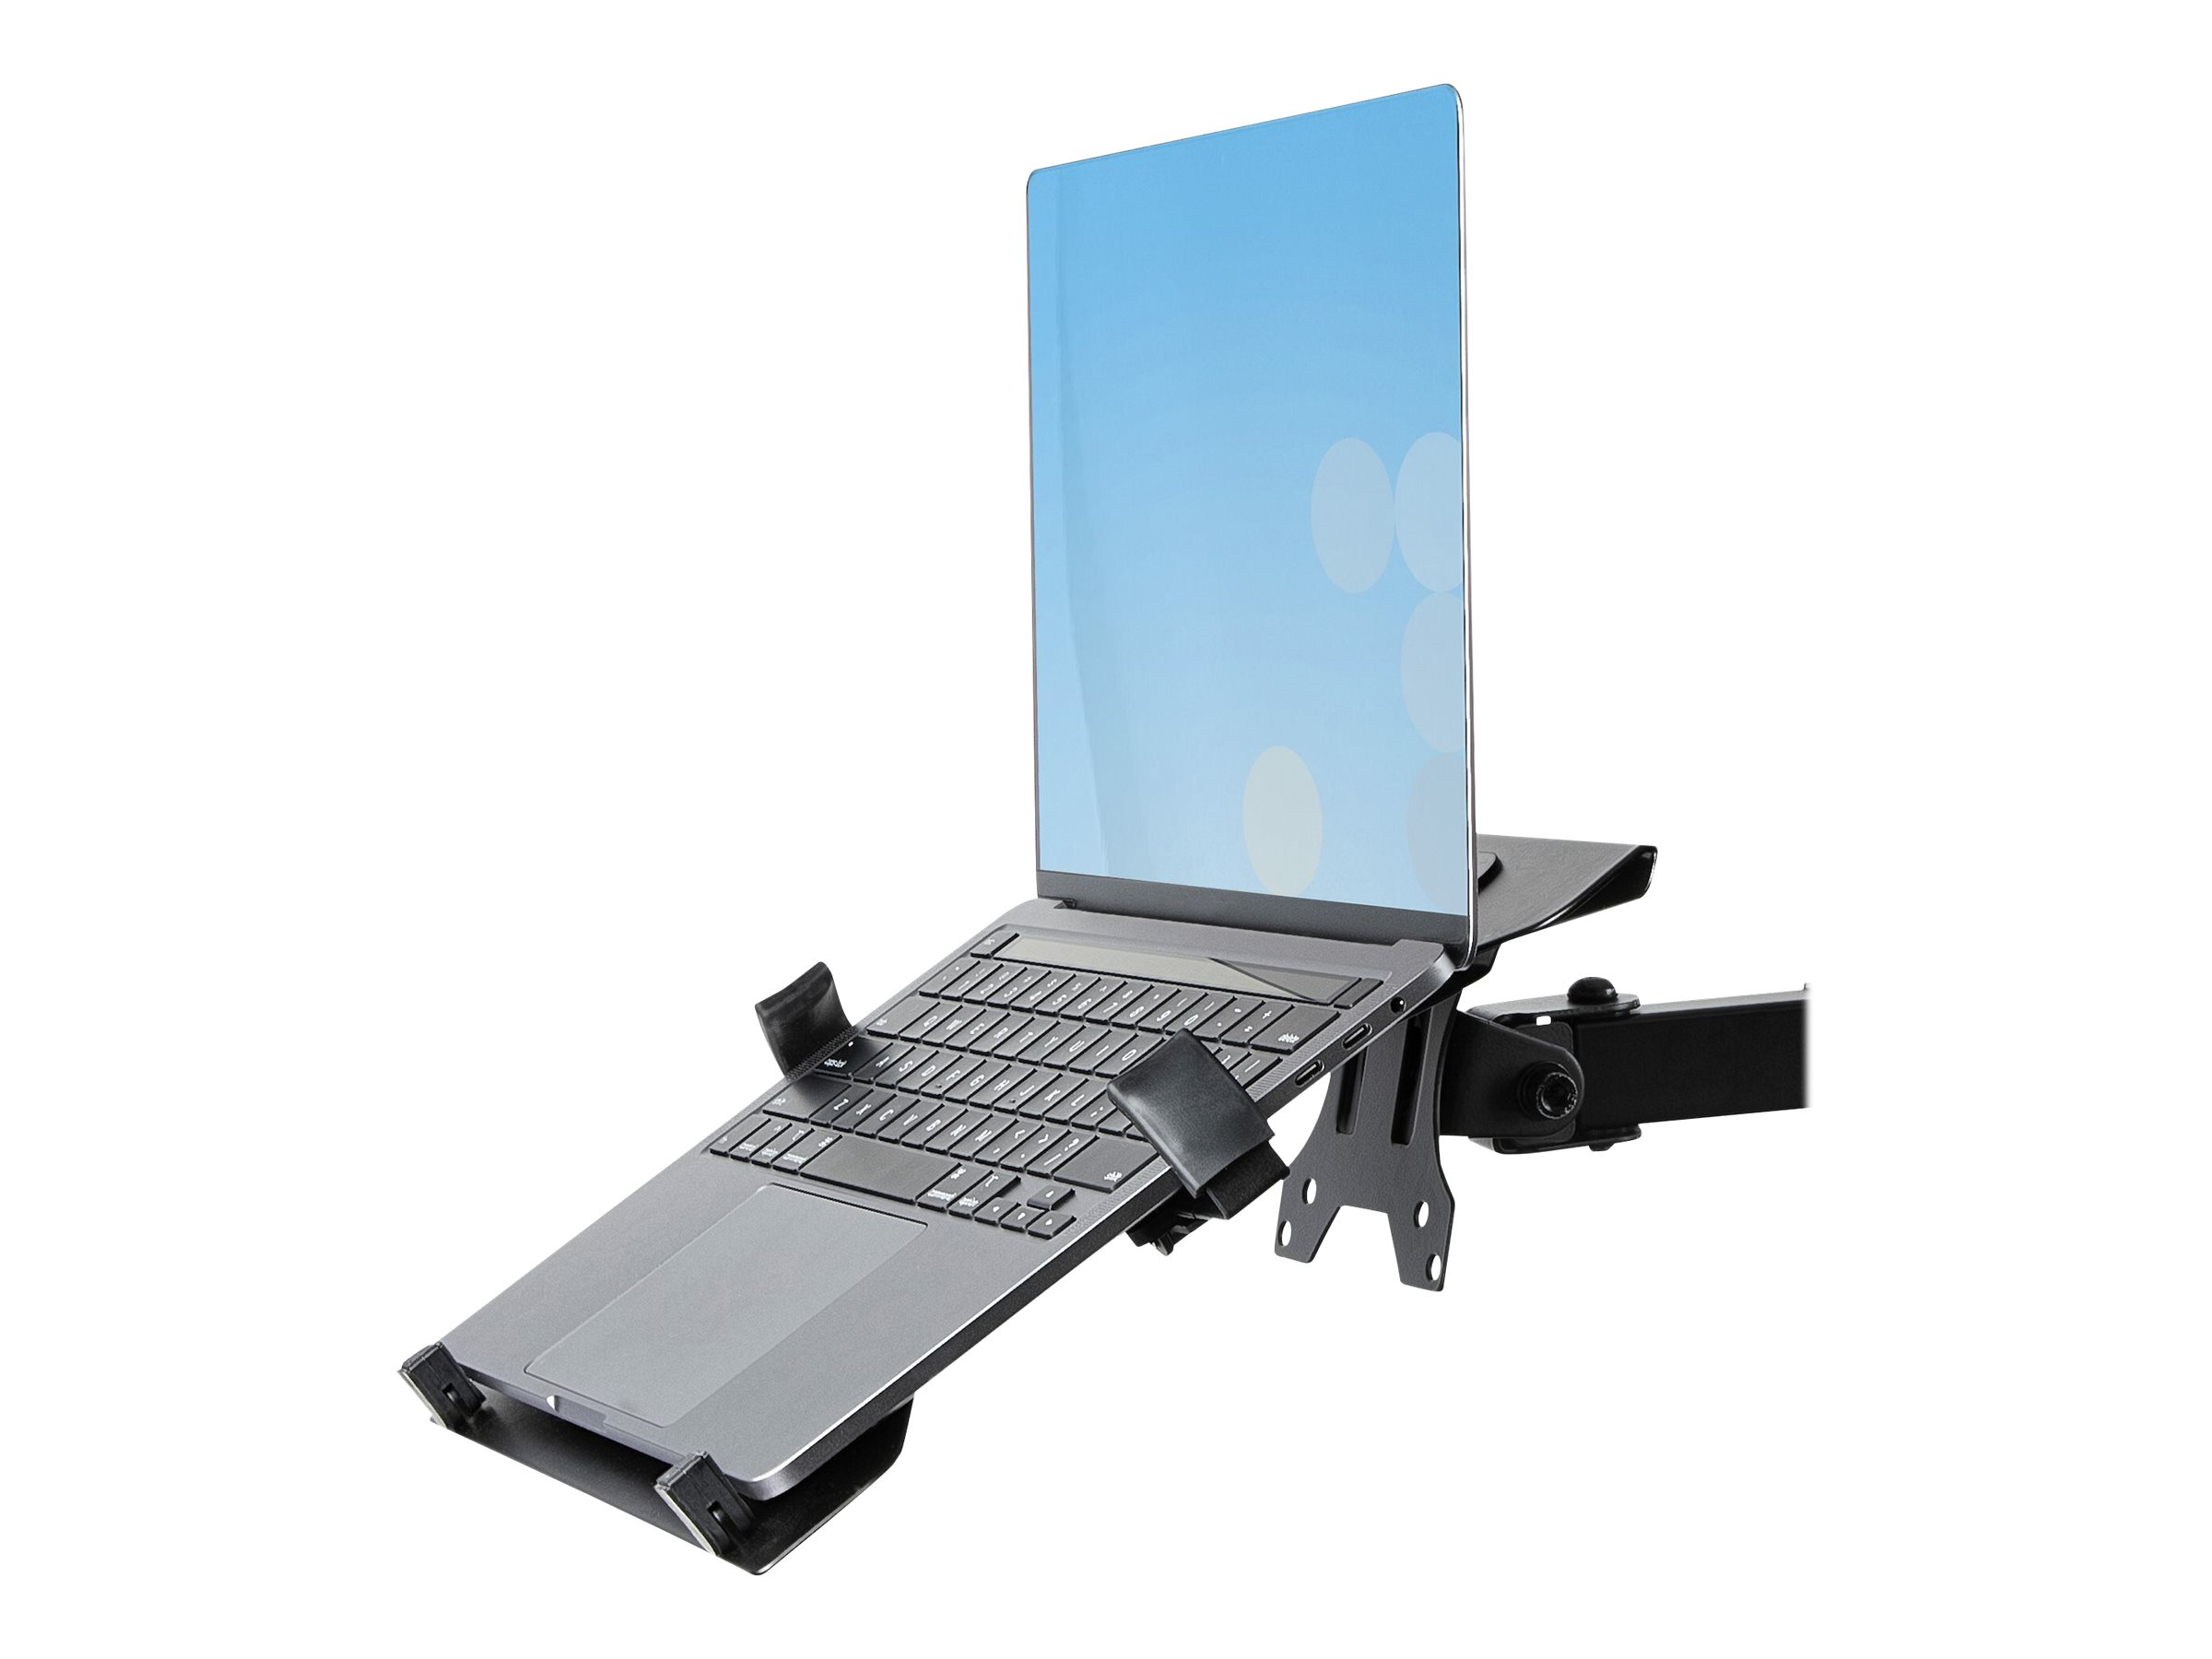 Monitor Arm + Laptop Stand, Laptop Mount